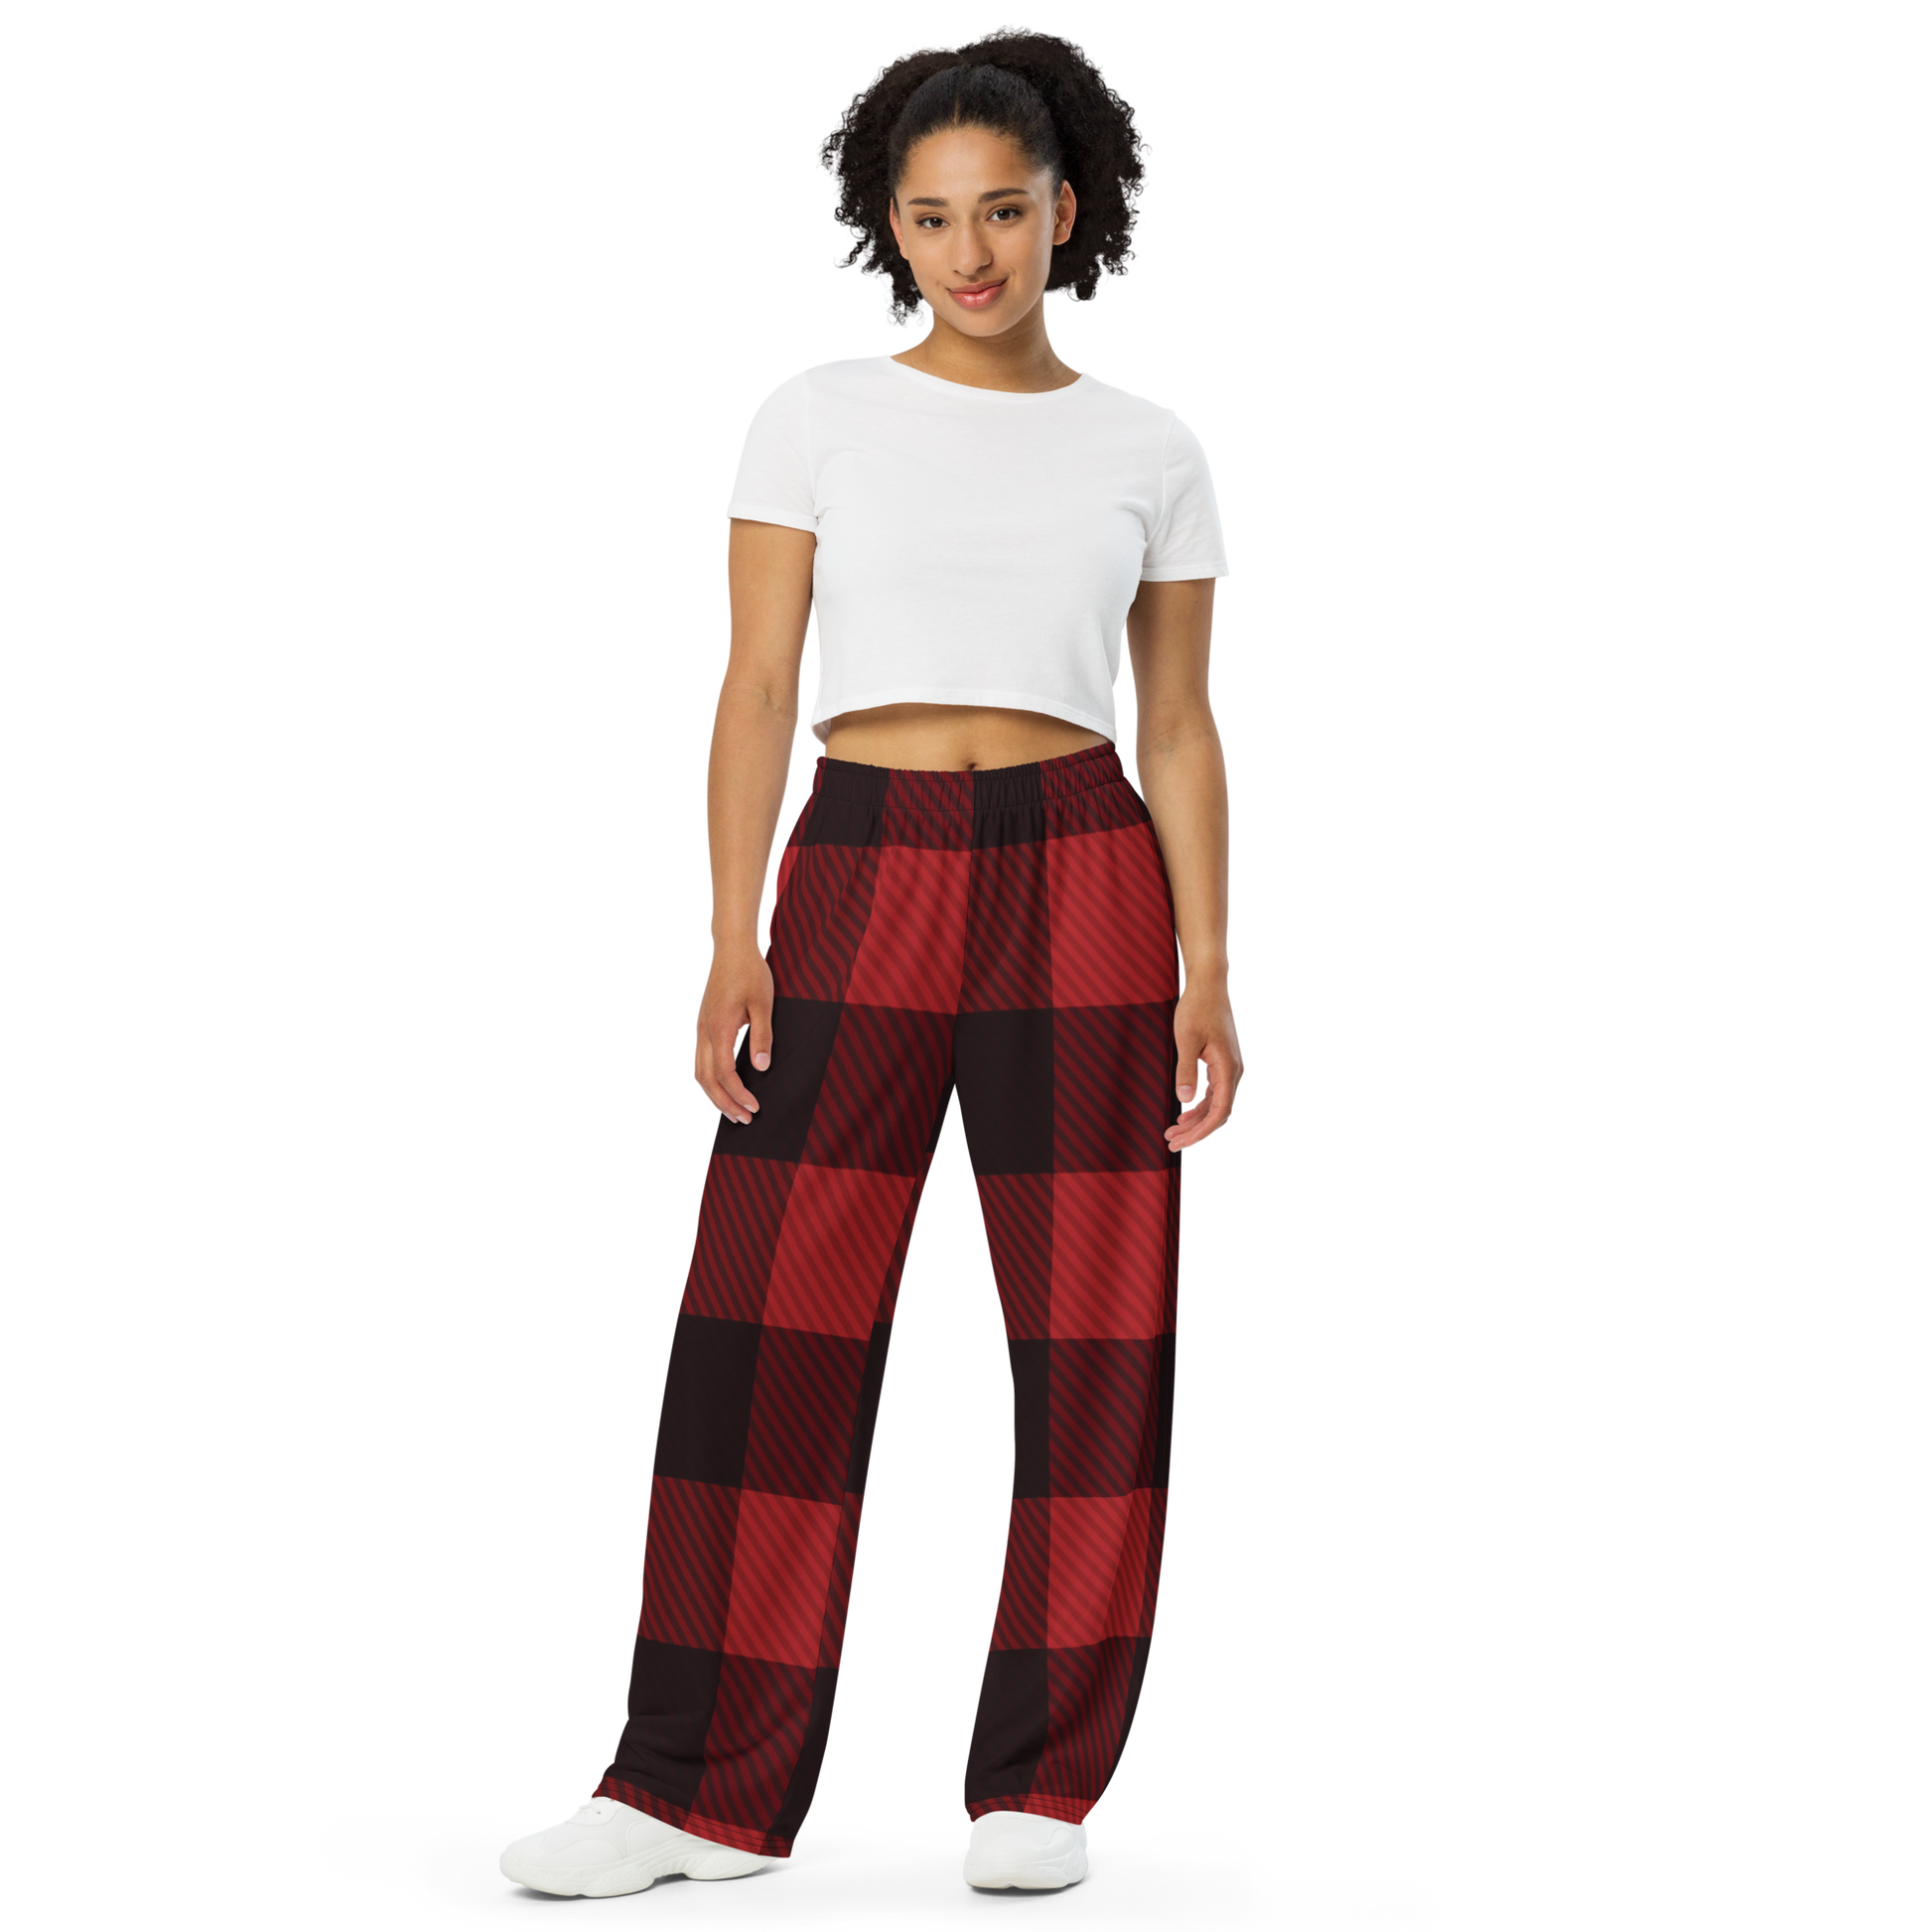 Unisex Pajama Pants in red & black plaid - familiar...yet different